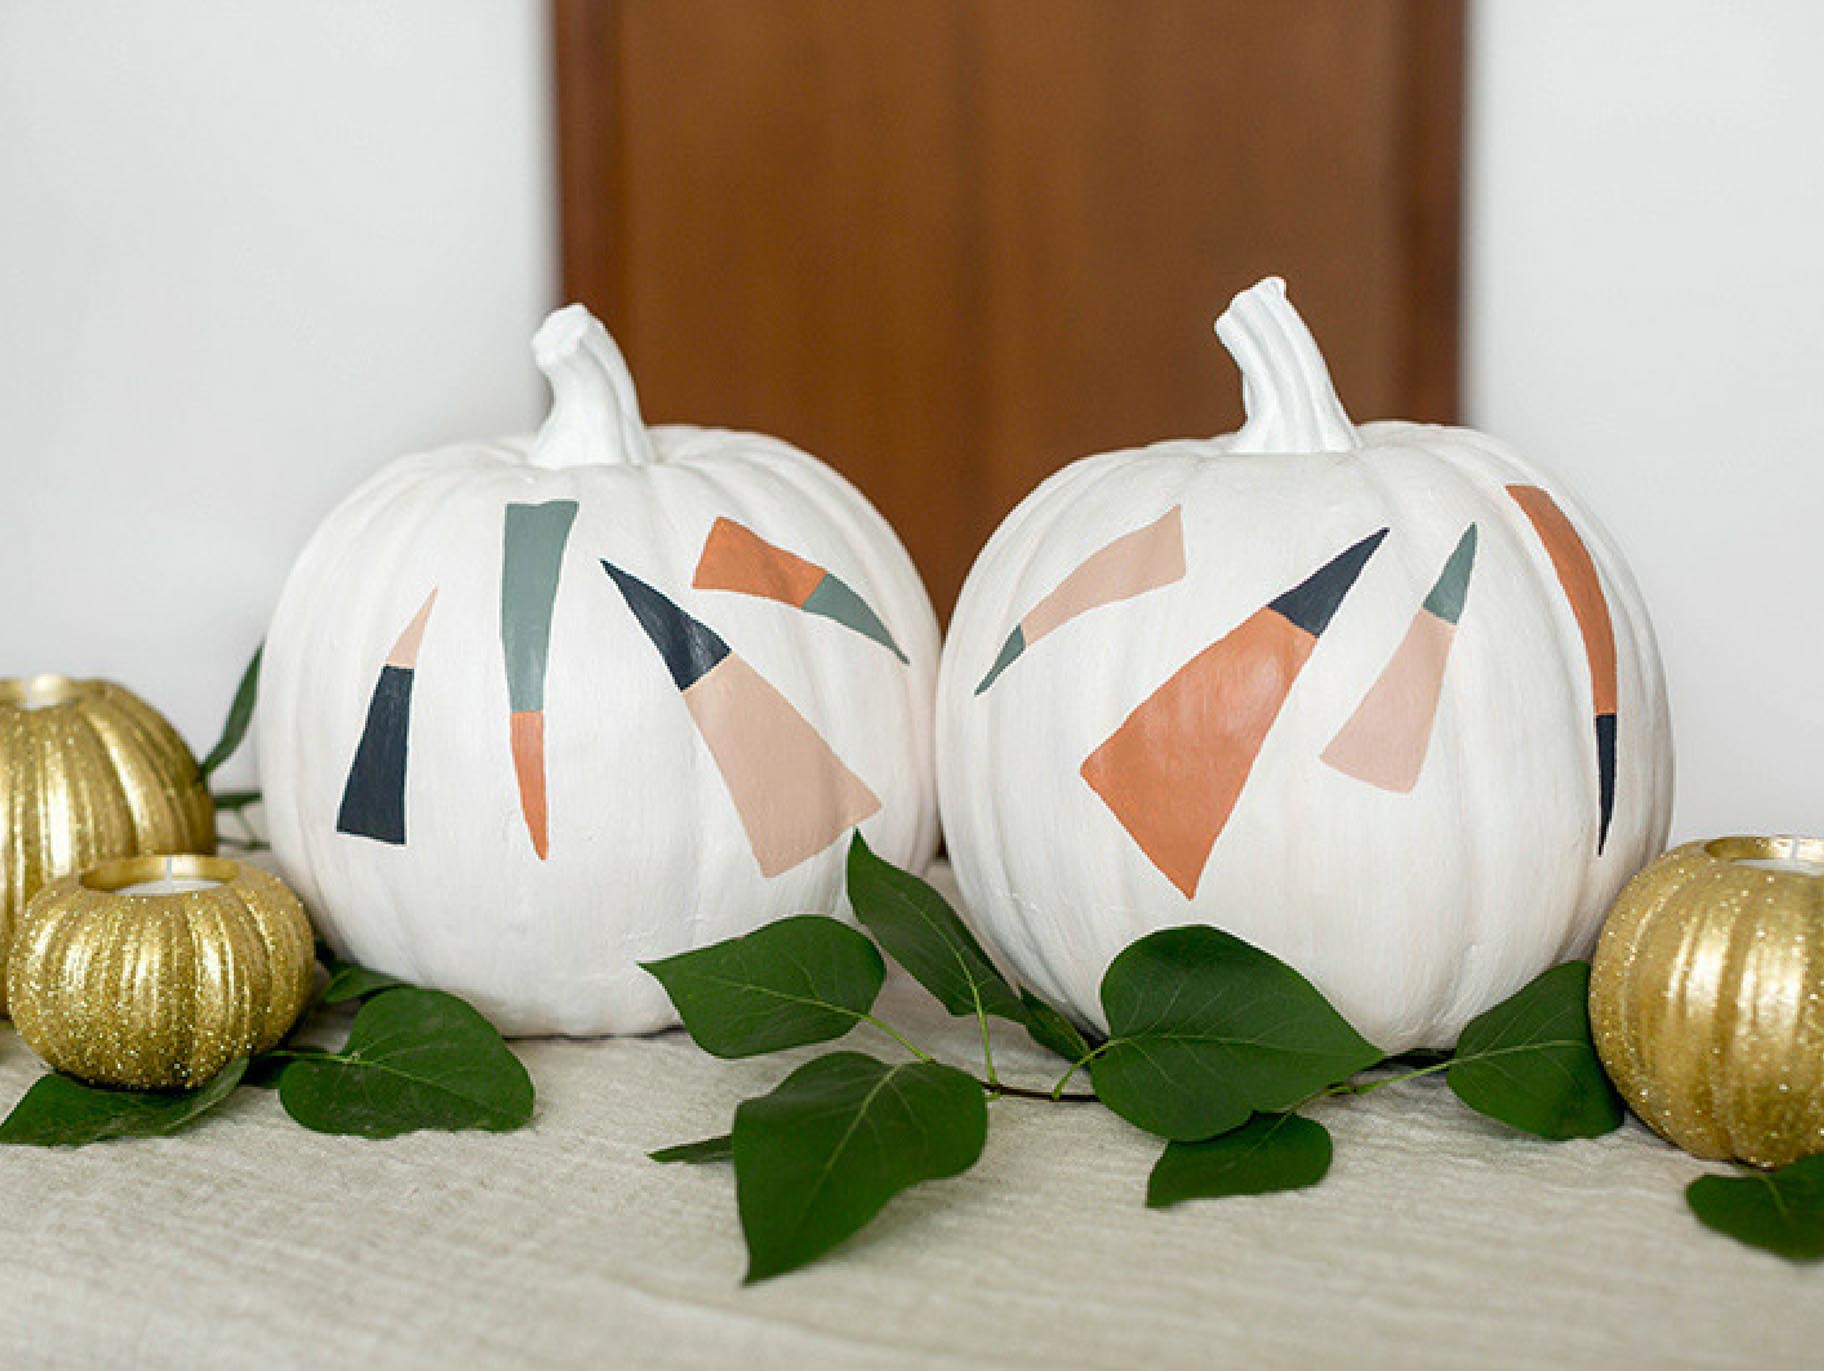 Crayola Pumpkin Paint Kit, 6 Acrylic Paints in Autumn Colors